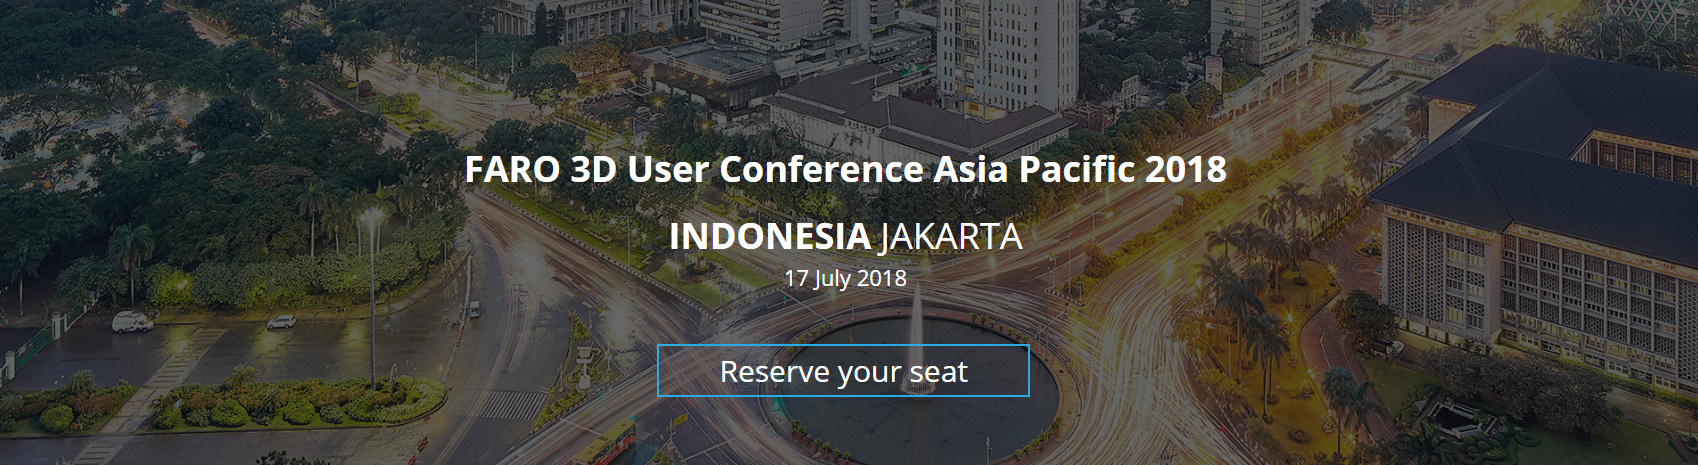 Faro User Conference Jakarta 2018